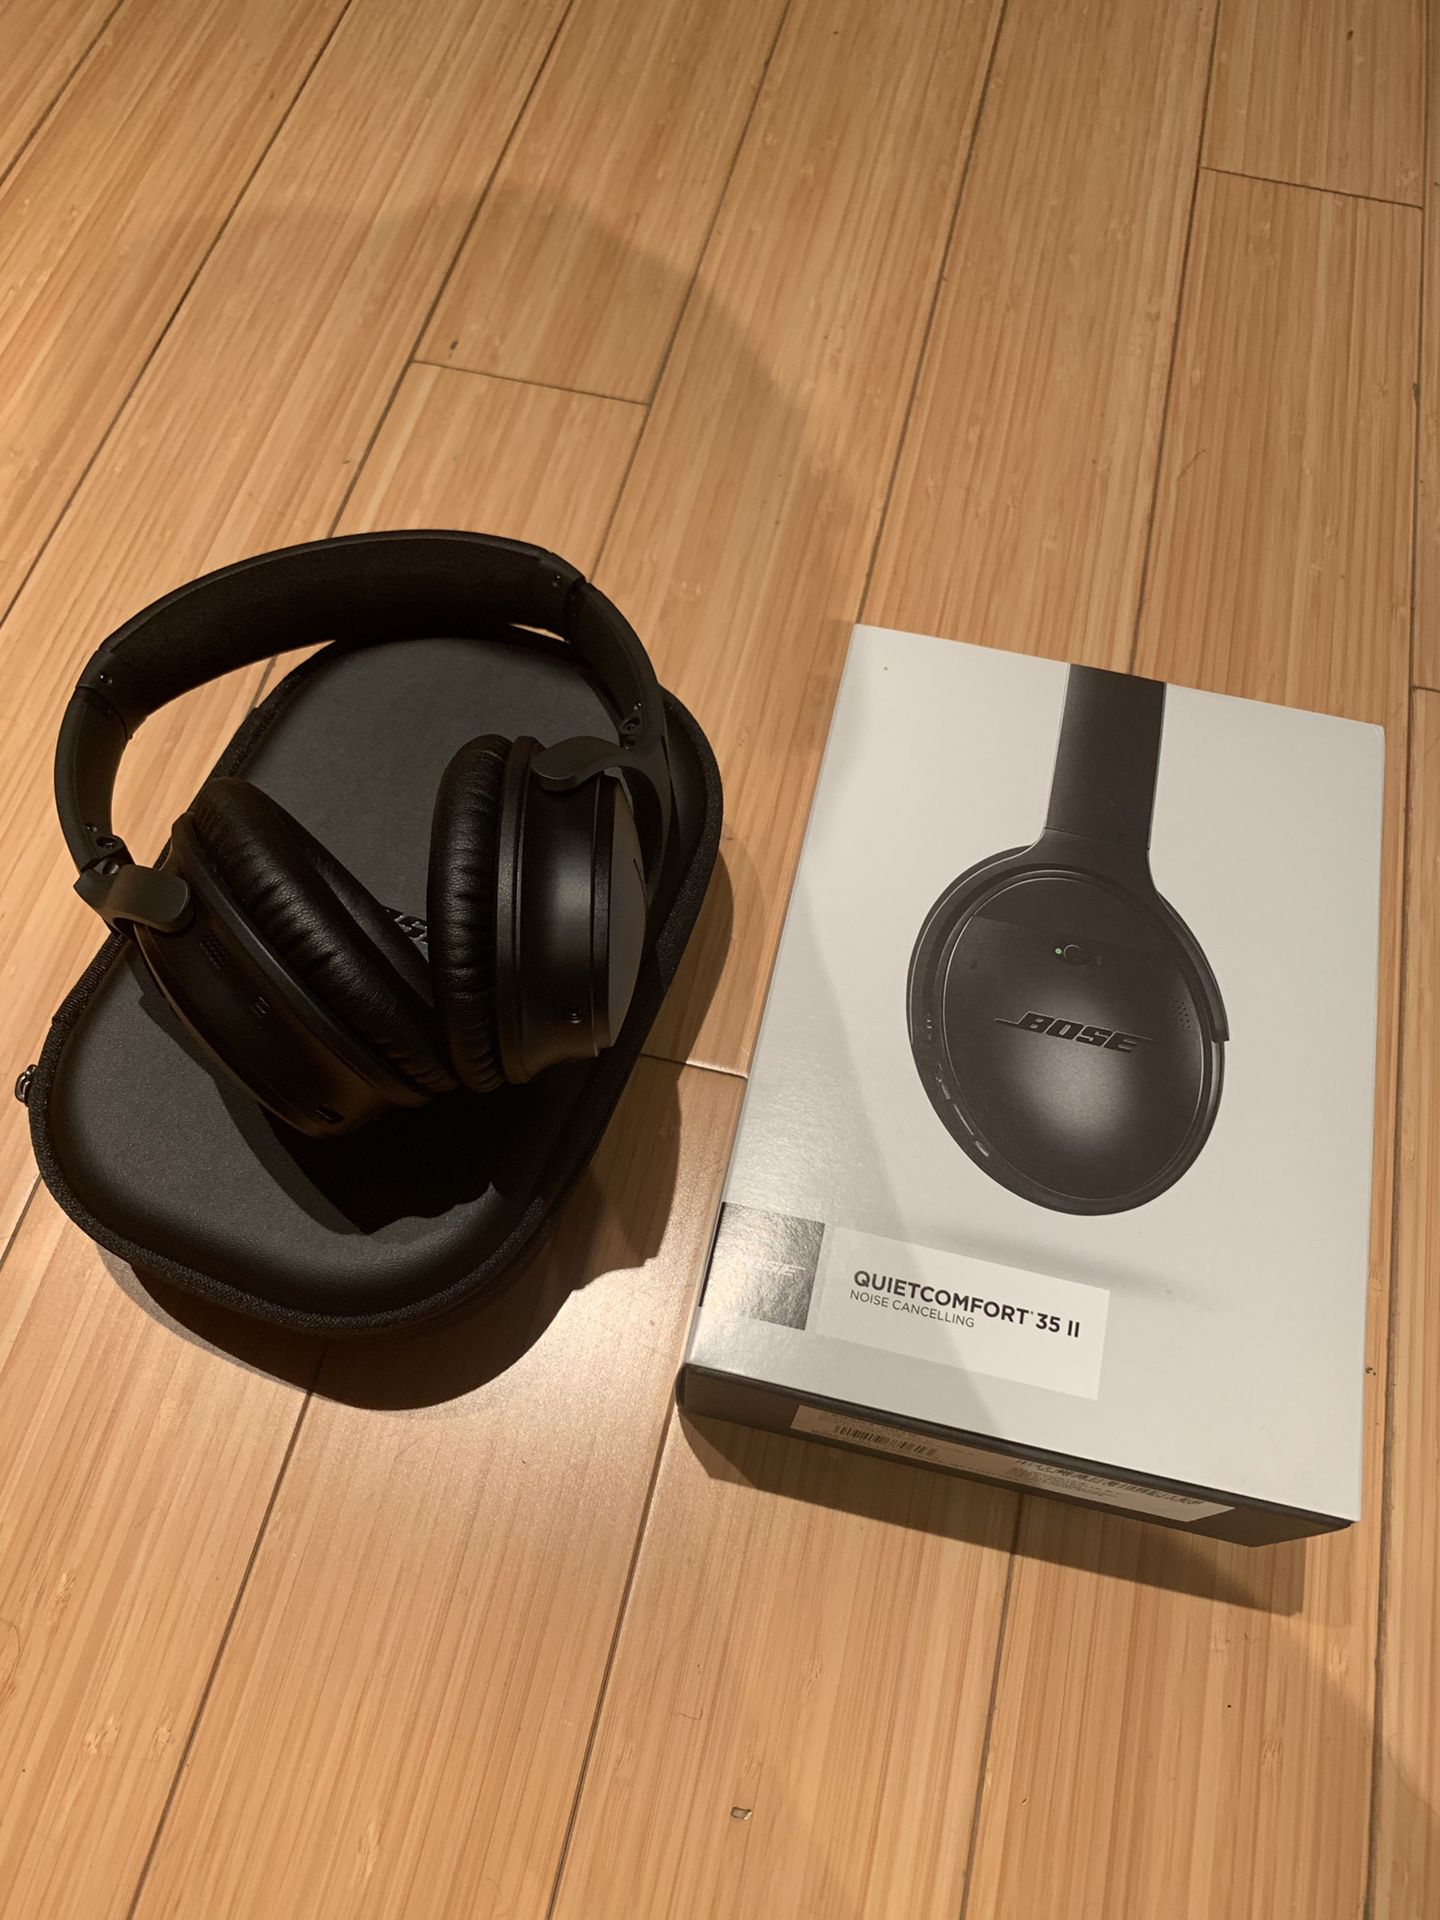 Bose QuietComfort 35 II wireless headphones II Noise cancellation with box